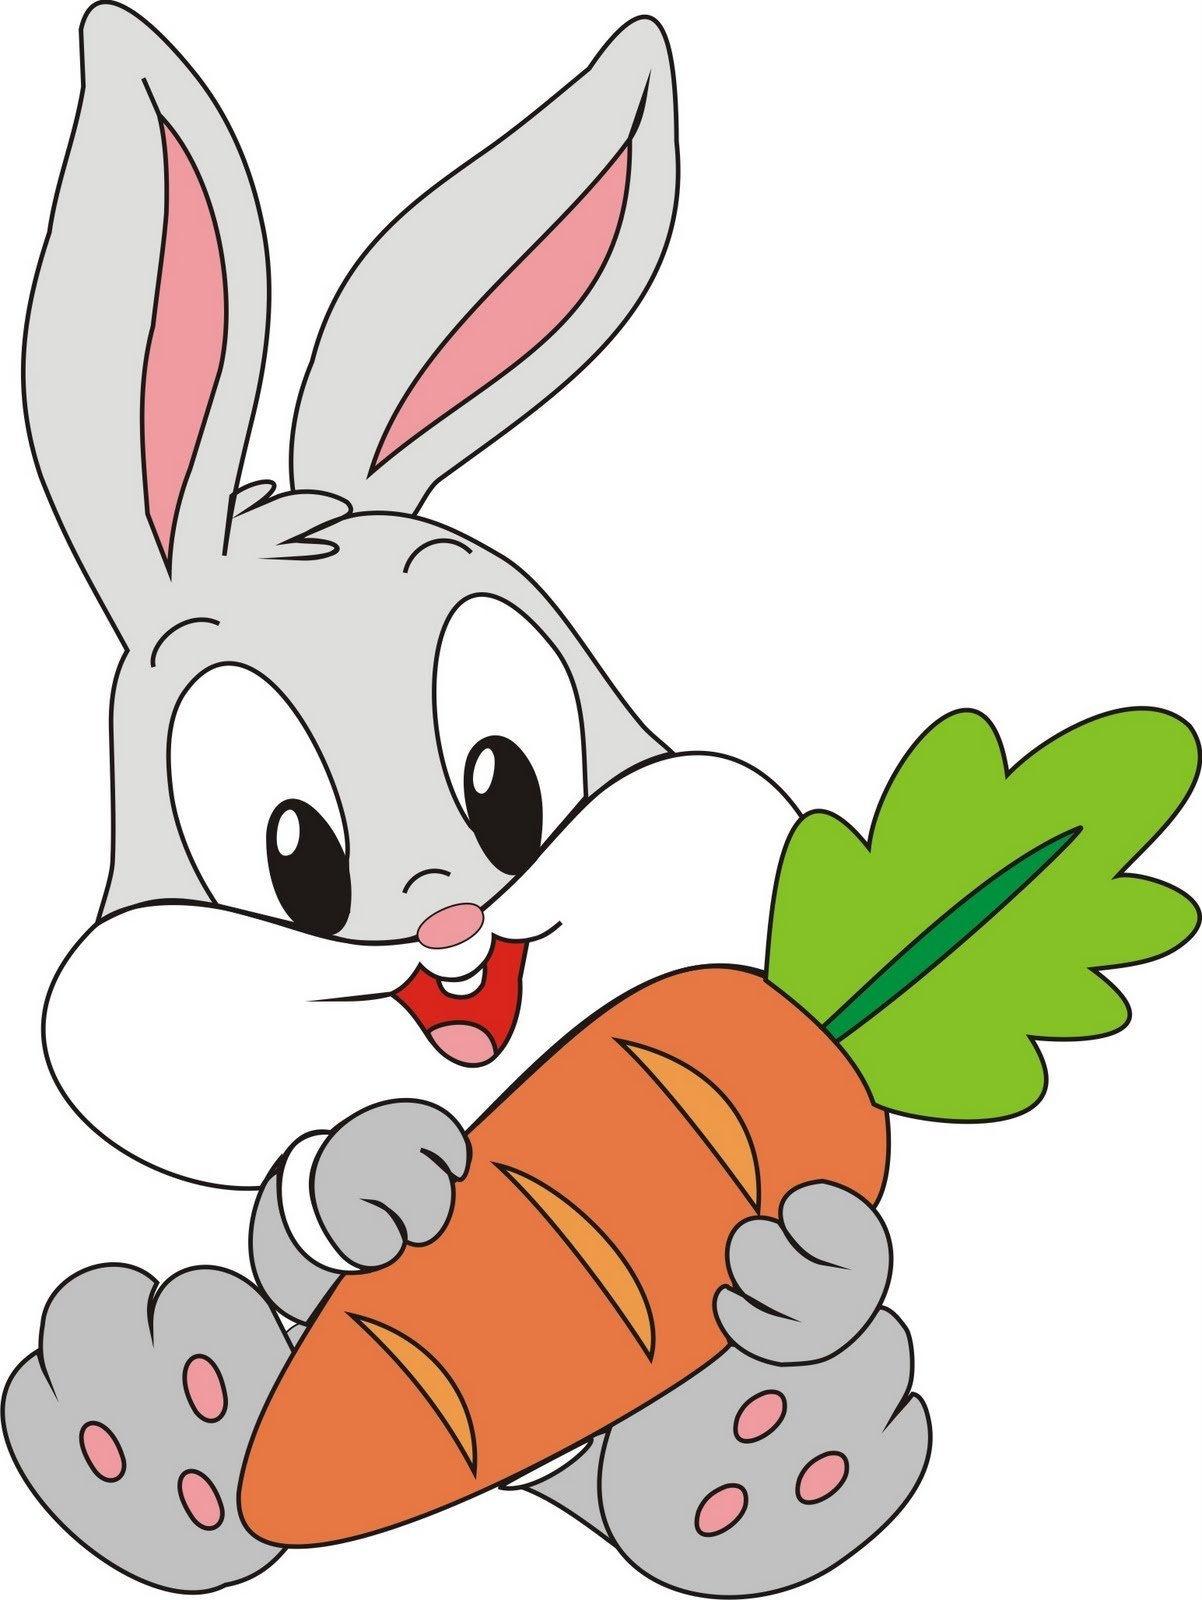 Заяц картинки нарисованные. Багз Банни. Кролика морковь. Багз Банни с морковкой. Малыши Луни Тюнз Банни. Багз Банни заяц маленький.